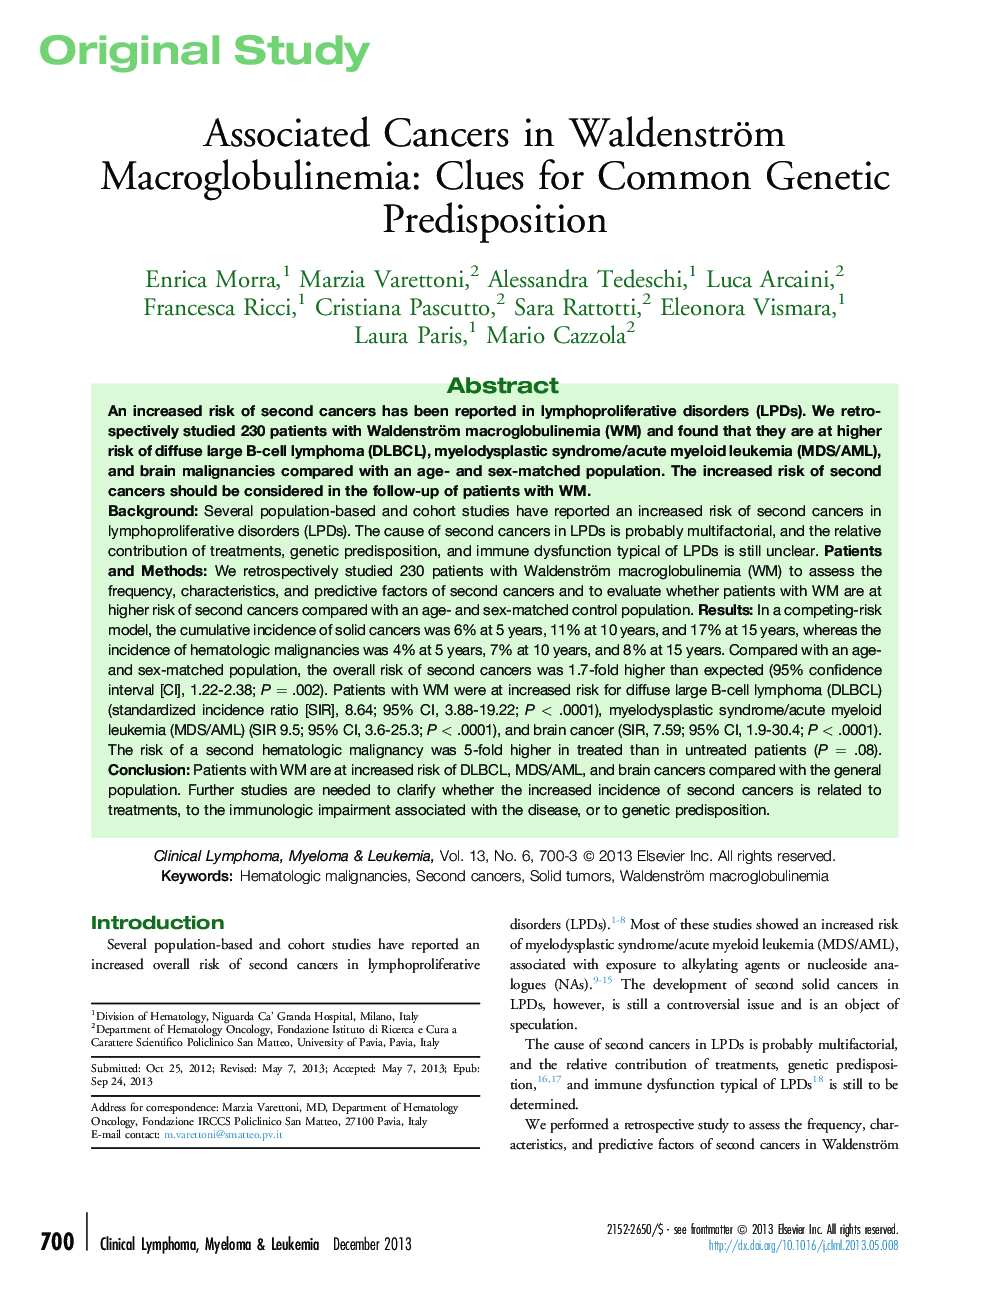 Original studyAssociated Cancers in Waldenström Macroglobulinemia: Clues for Common Genetic Predisposition